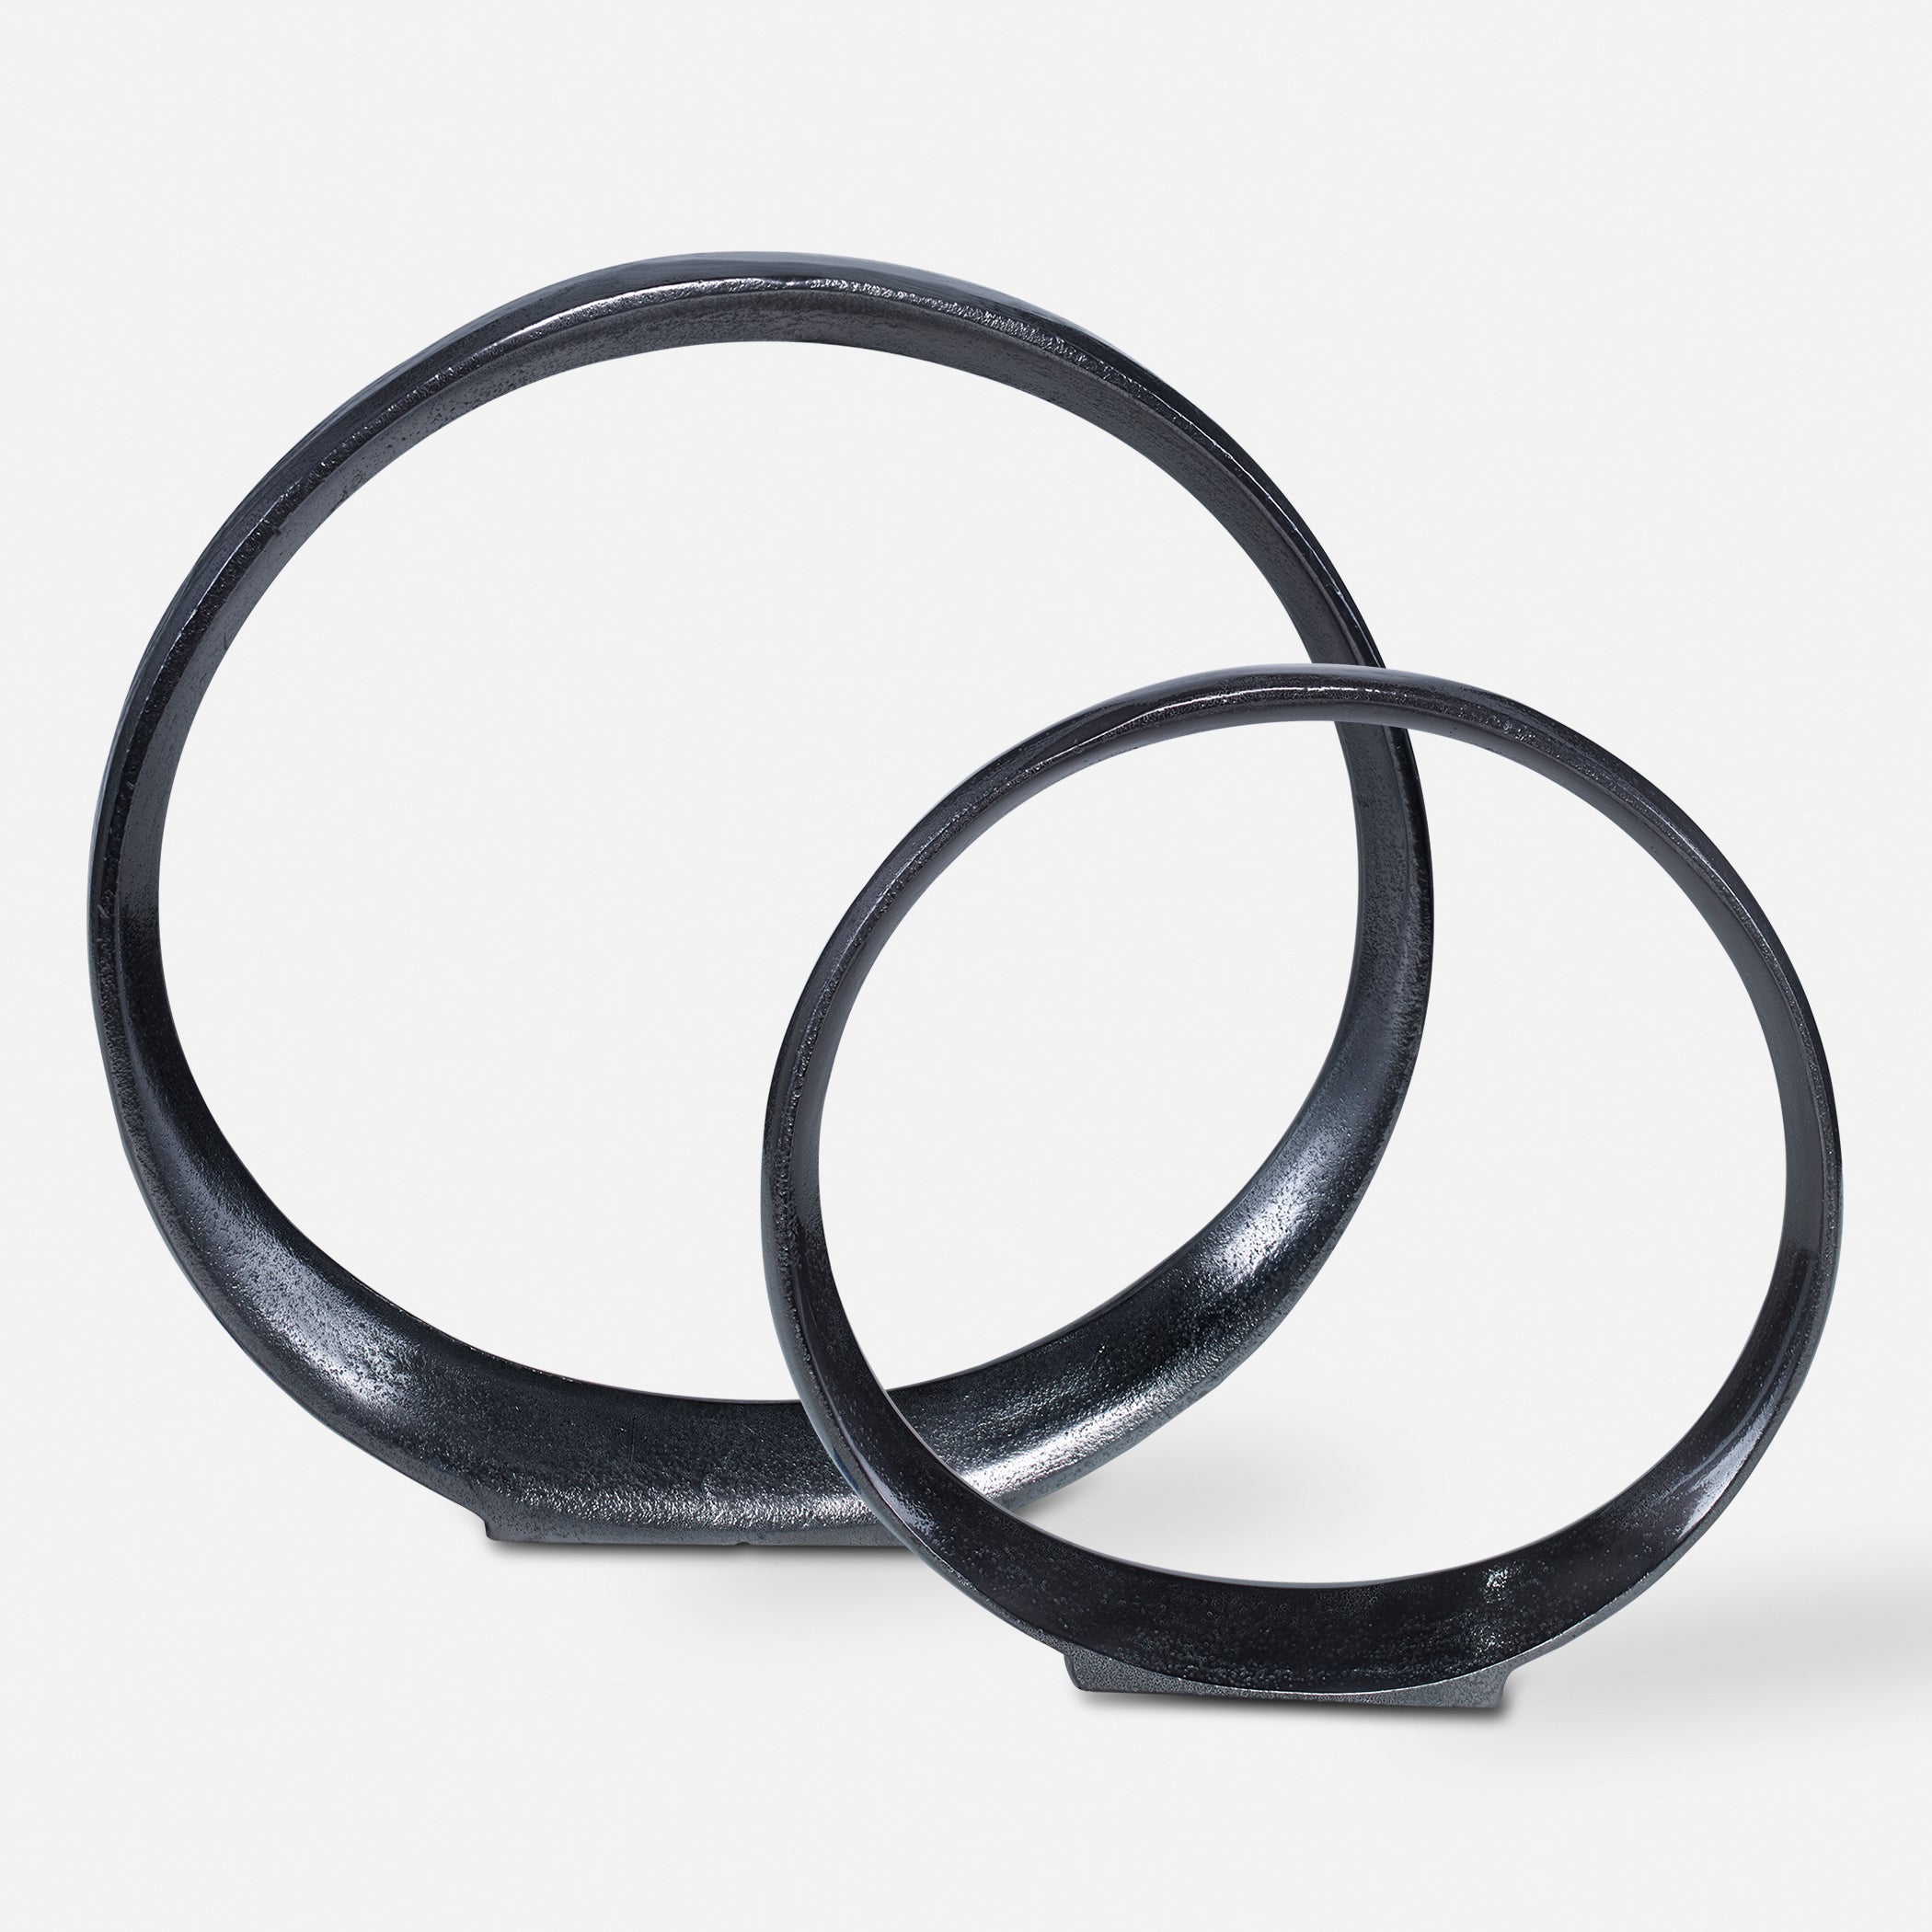 Uttermost Orbits Black Ring Sculptures, S/2 Décor/Home Accent Uttermost   